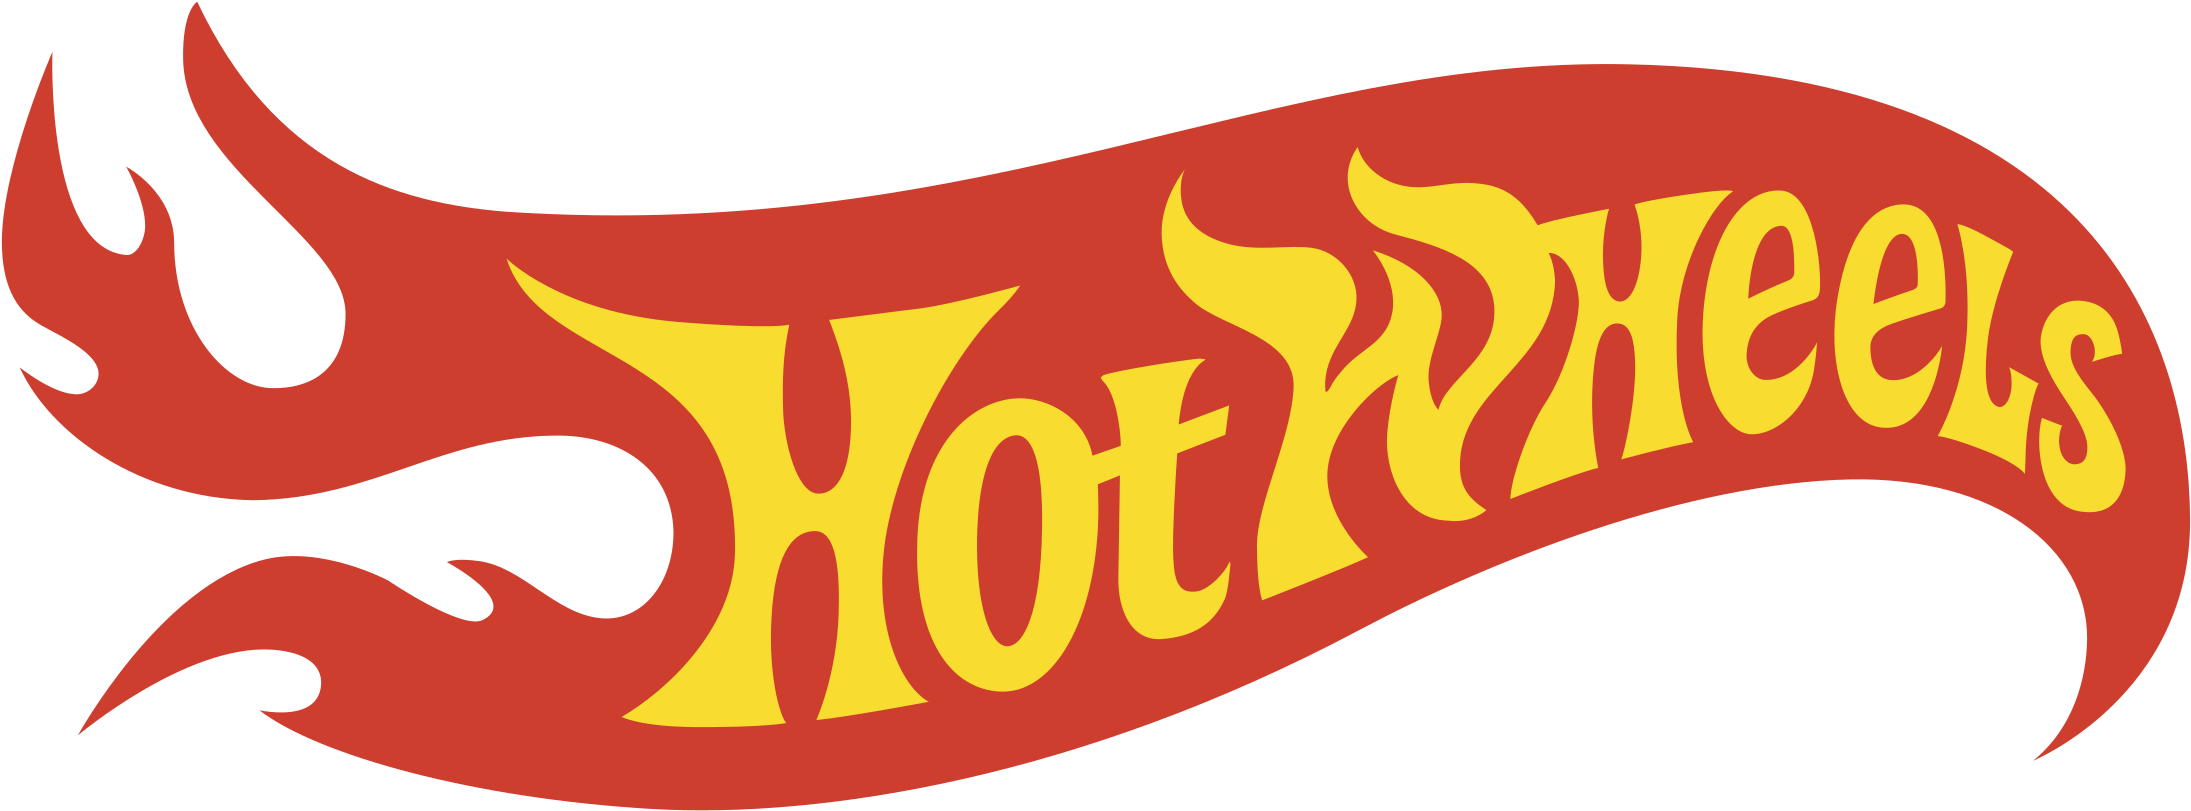 Hot wheels logo